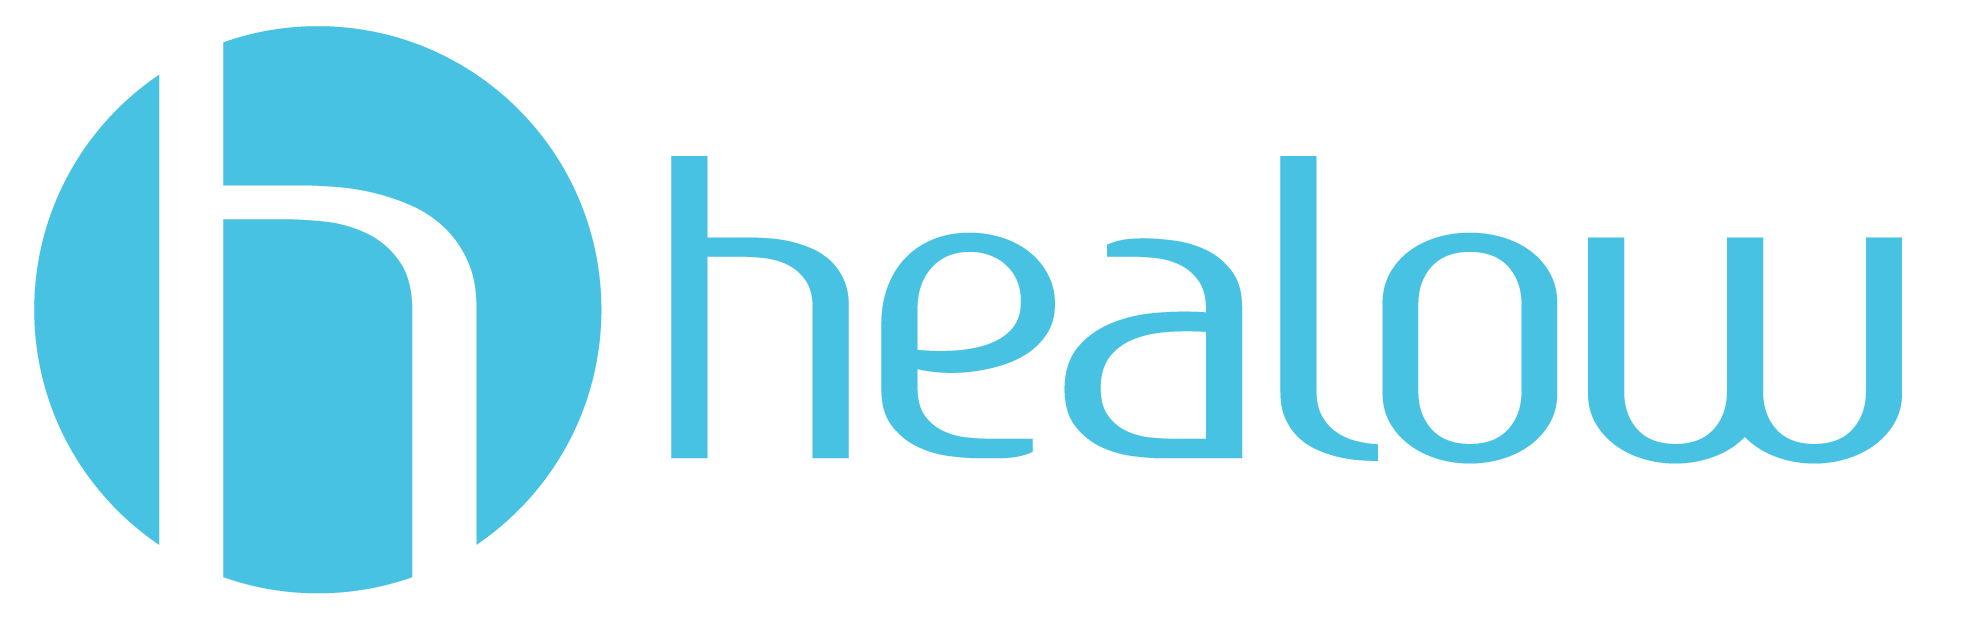 healow logo no tagline full color 01